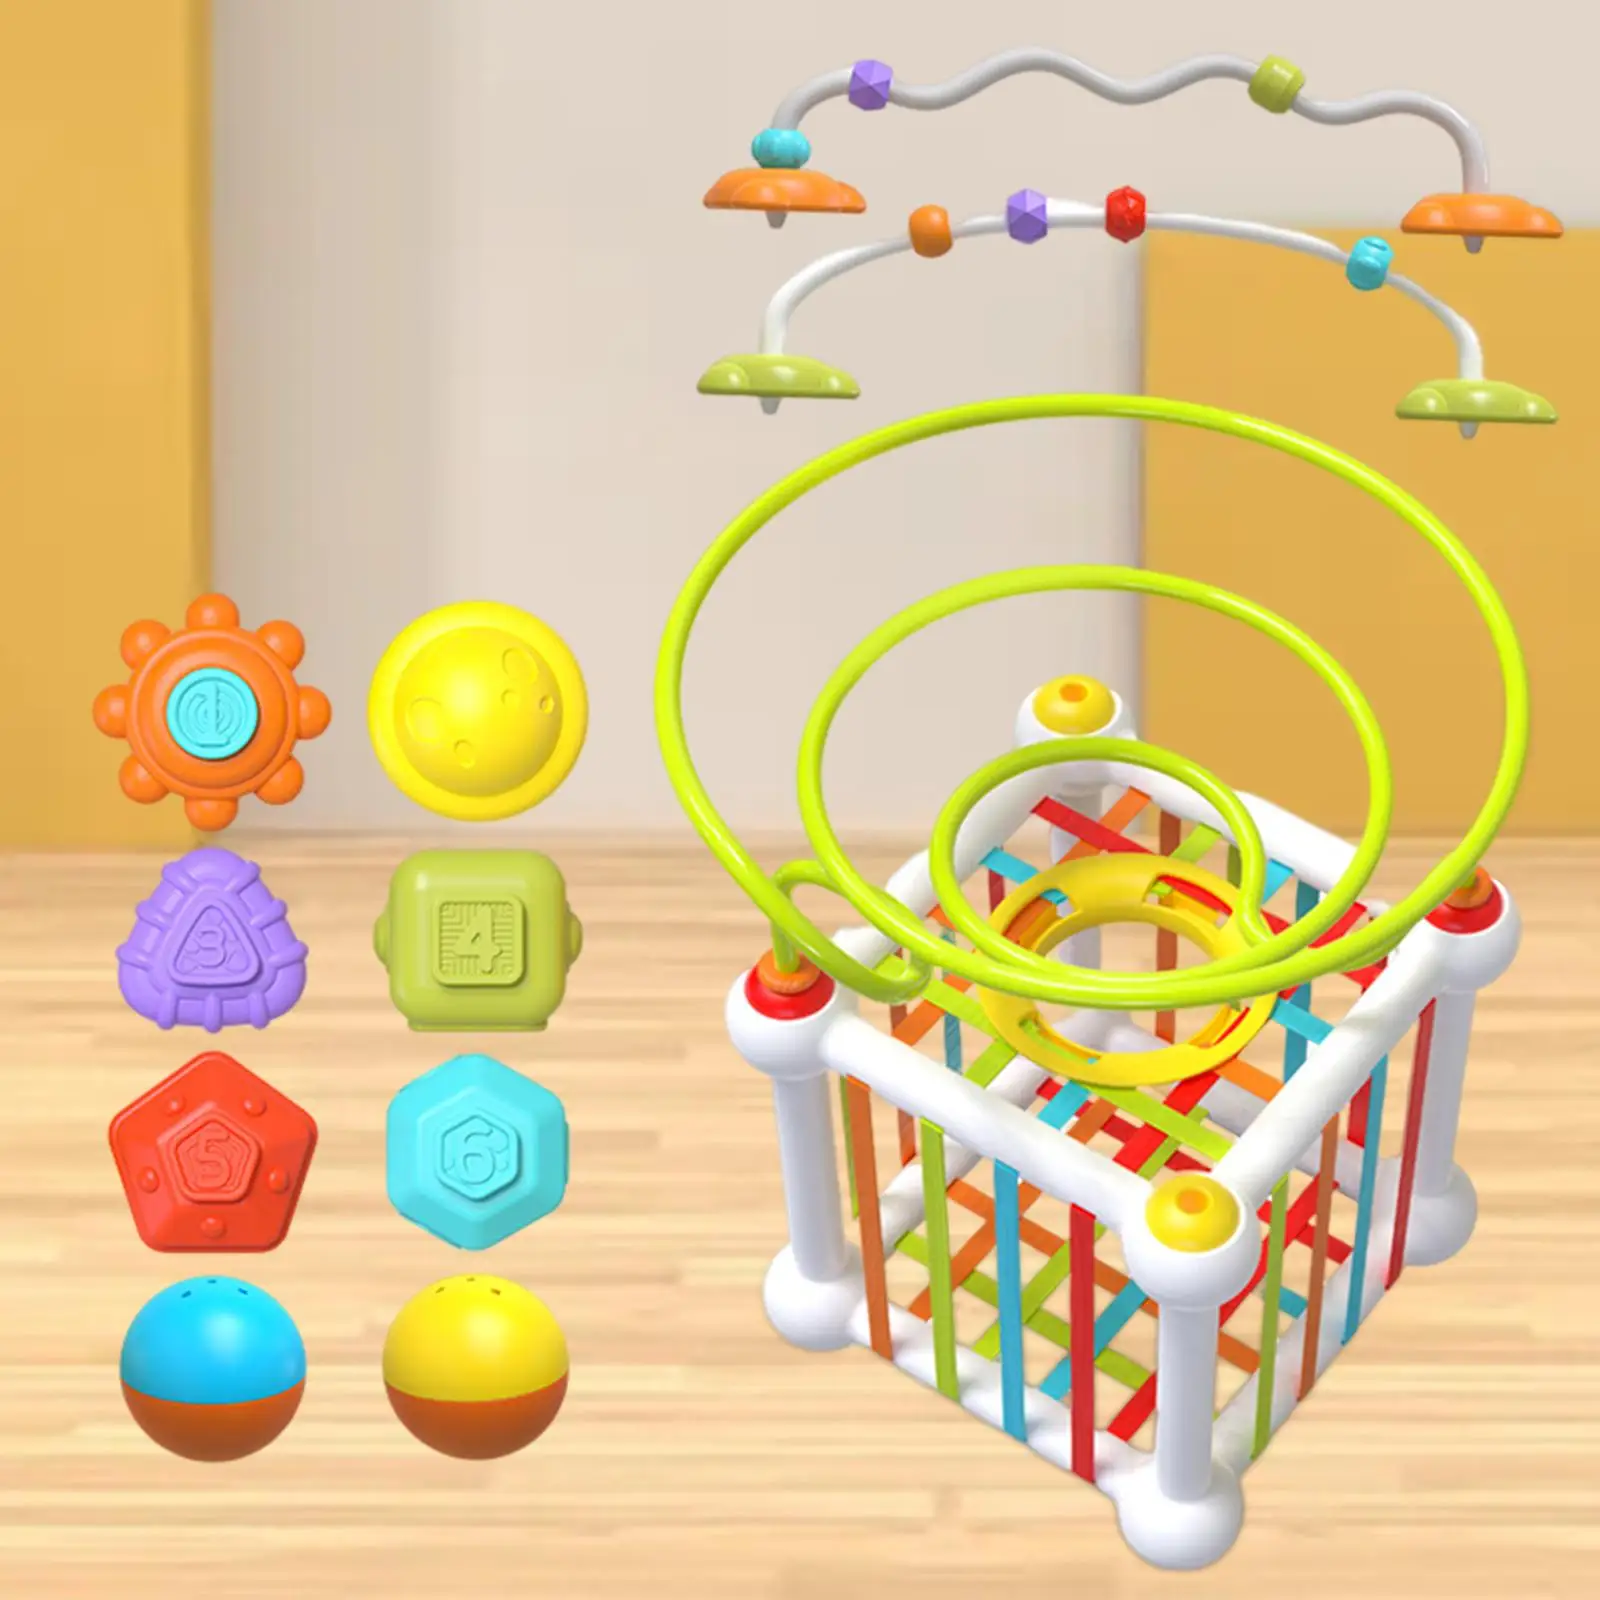 Montessori Shape Blocks Learning Textured Balls Sorting Games for Game Imagination Creativity Sensory Exploration Activity